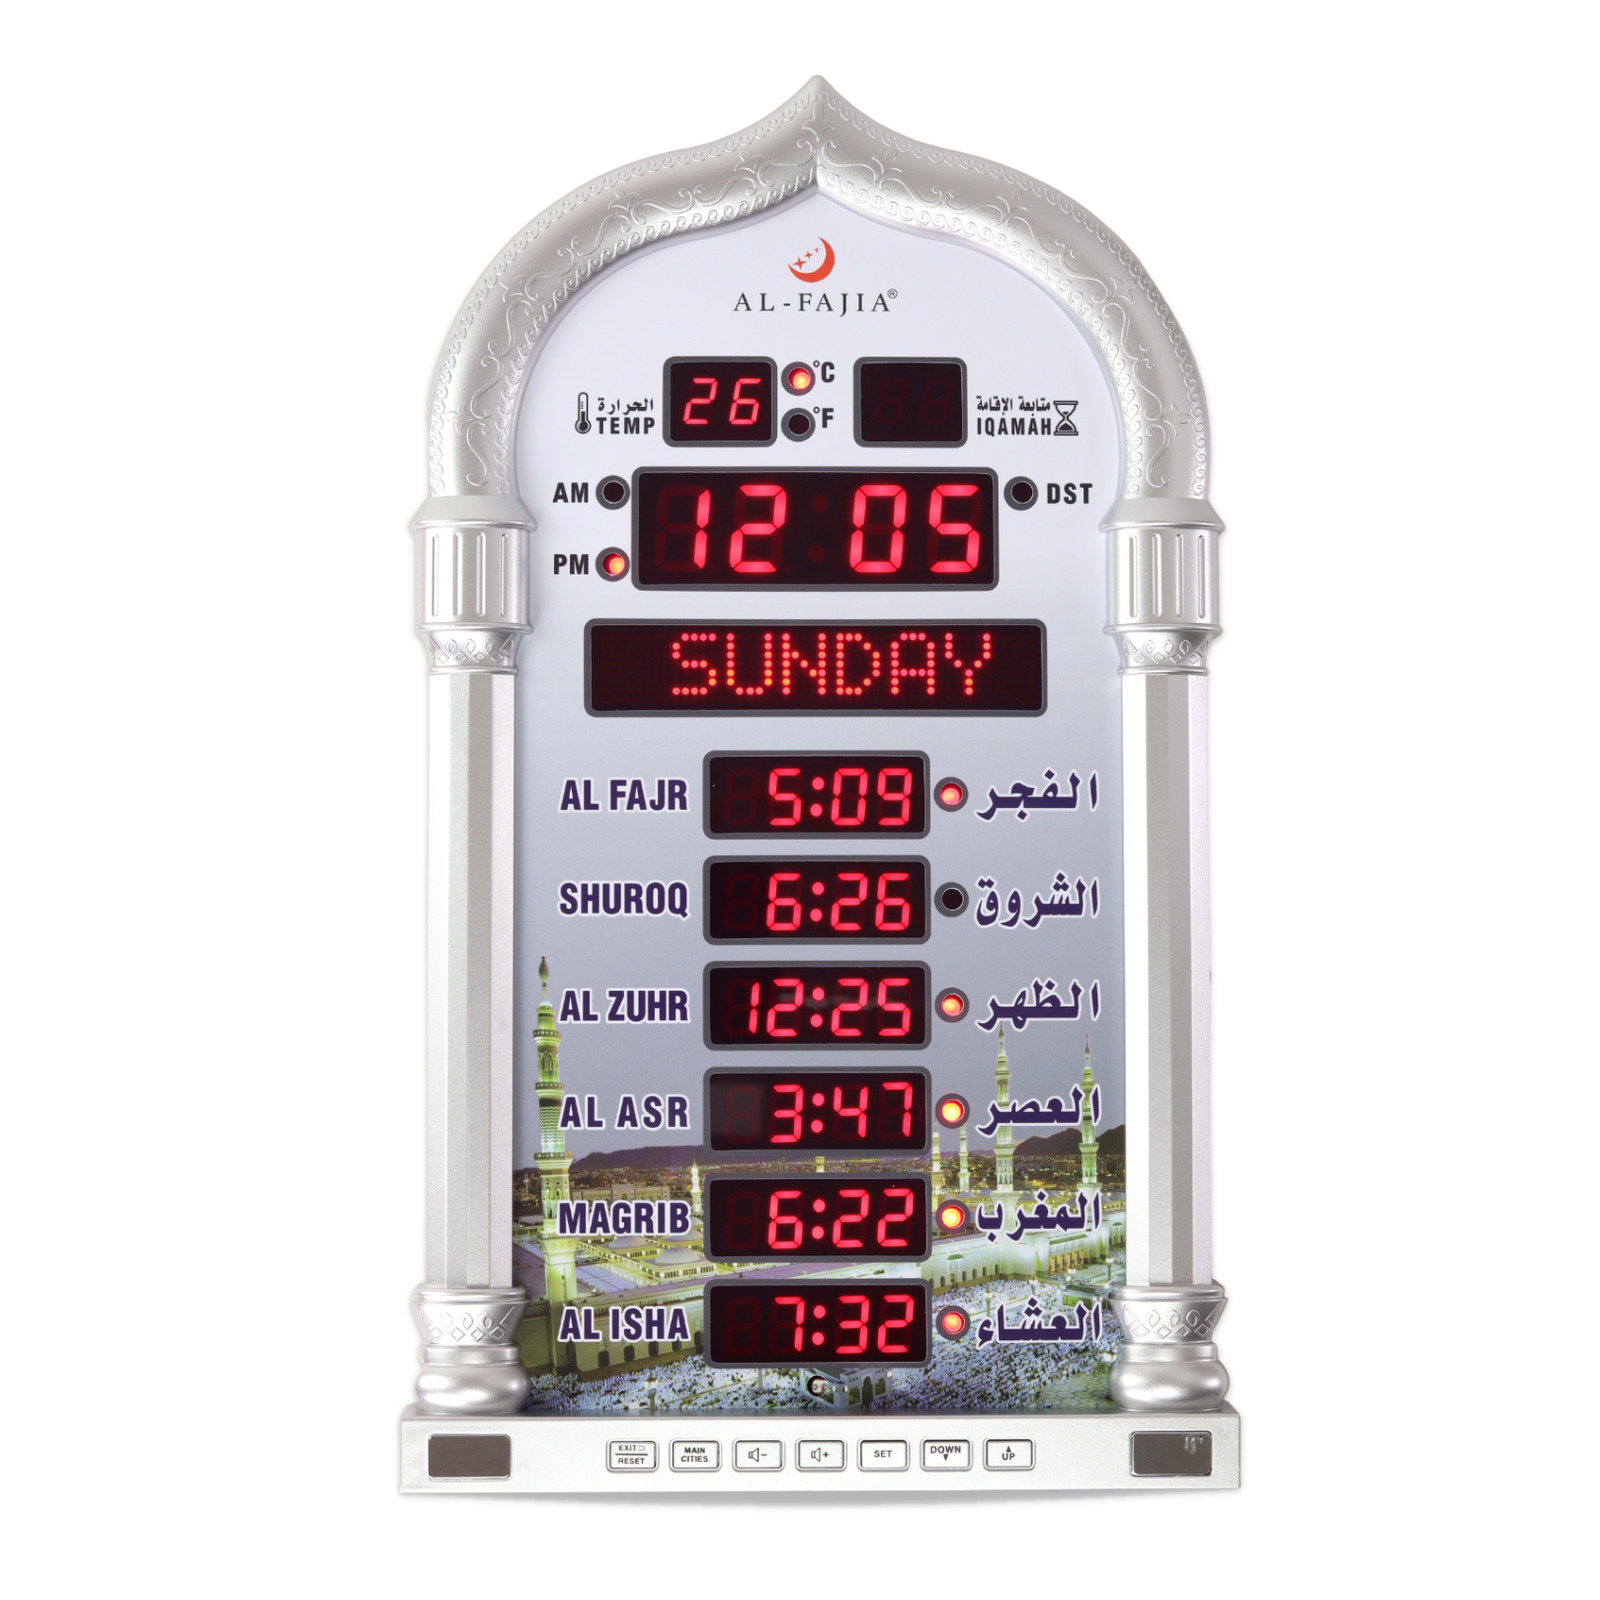 AL-FAJIA Digital Azan Athan Prayer LED Wall Clock for USA Home Office - Silver